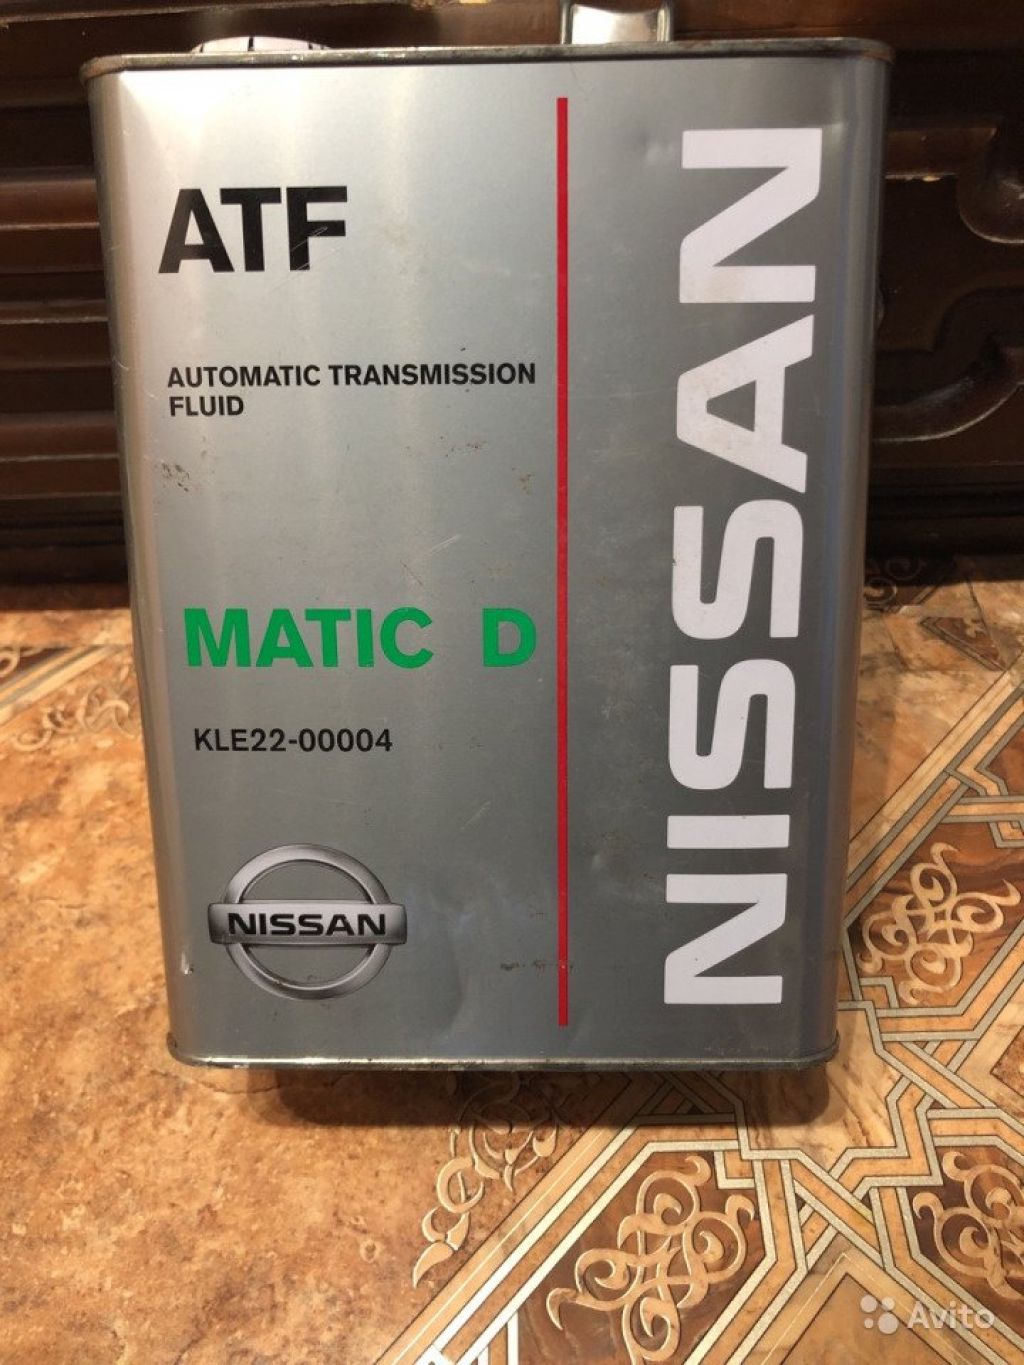 Атф ниссан. Nissan ATF matic d (артикул 4л — kle22-00004). Nissan ATF matic d. Nissan kle22-00004. Nissan matic d ATF артикул.